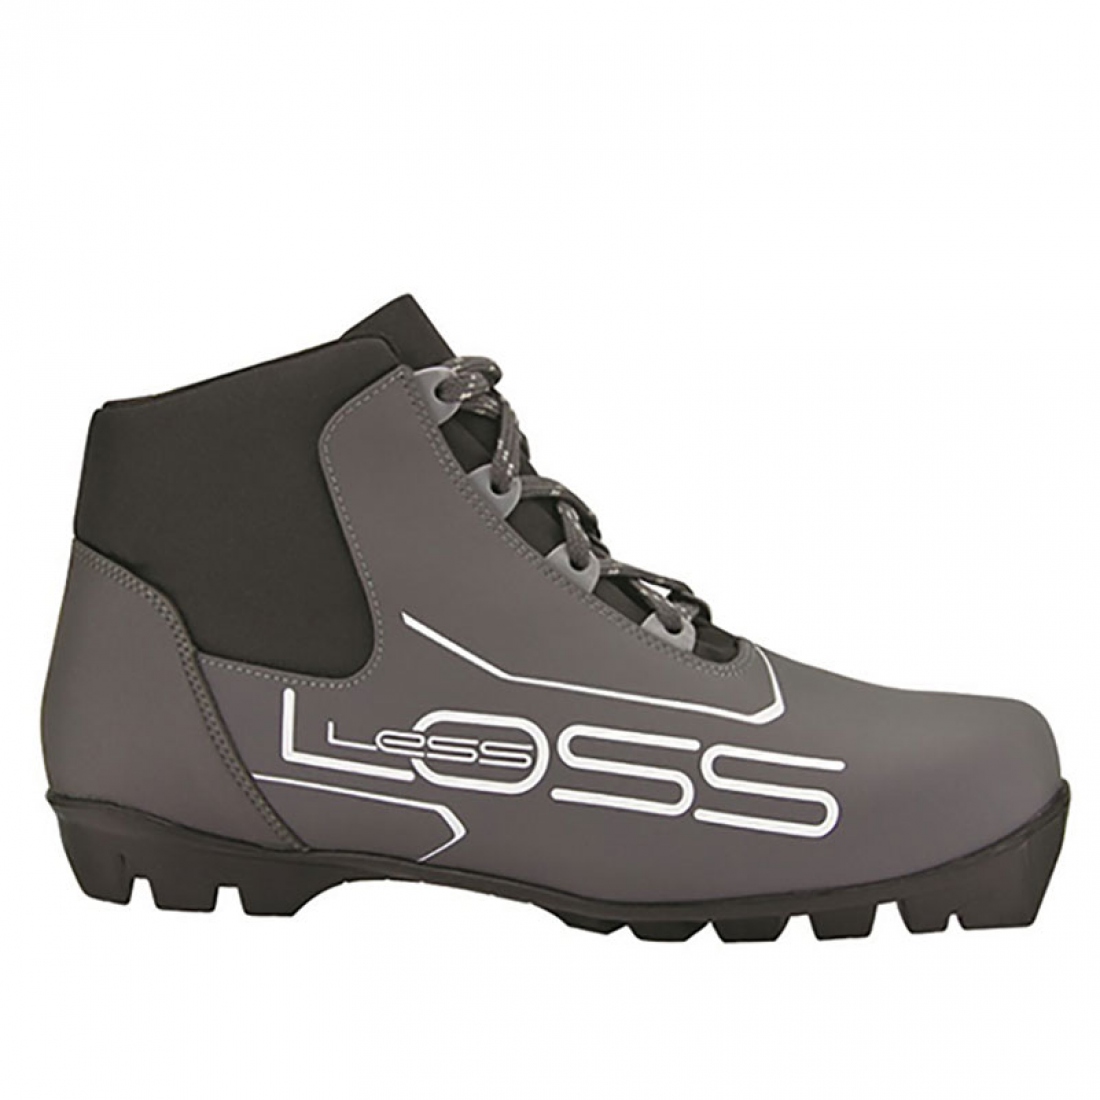 Ботинки лыжные Spine Loss 243, крепление NNN, размер 44